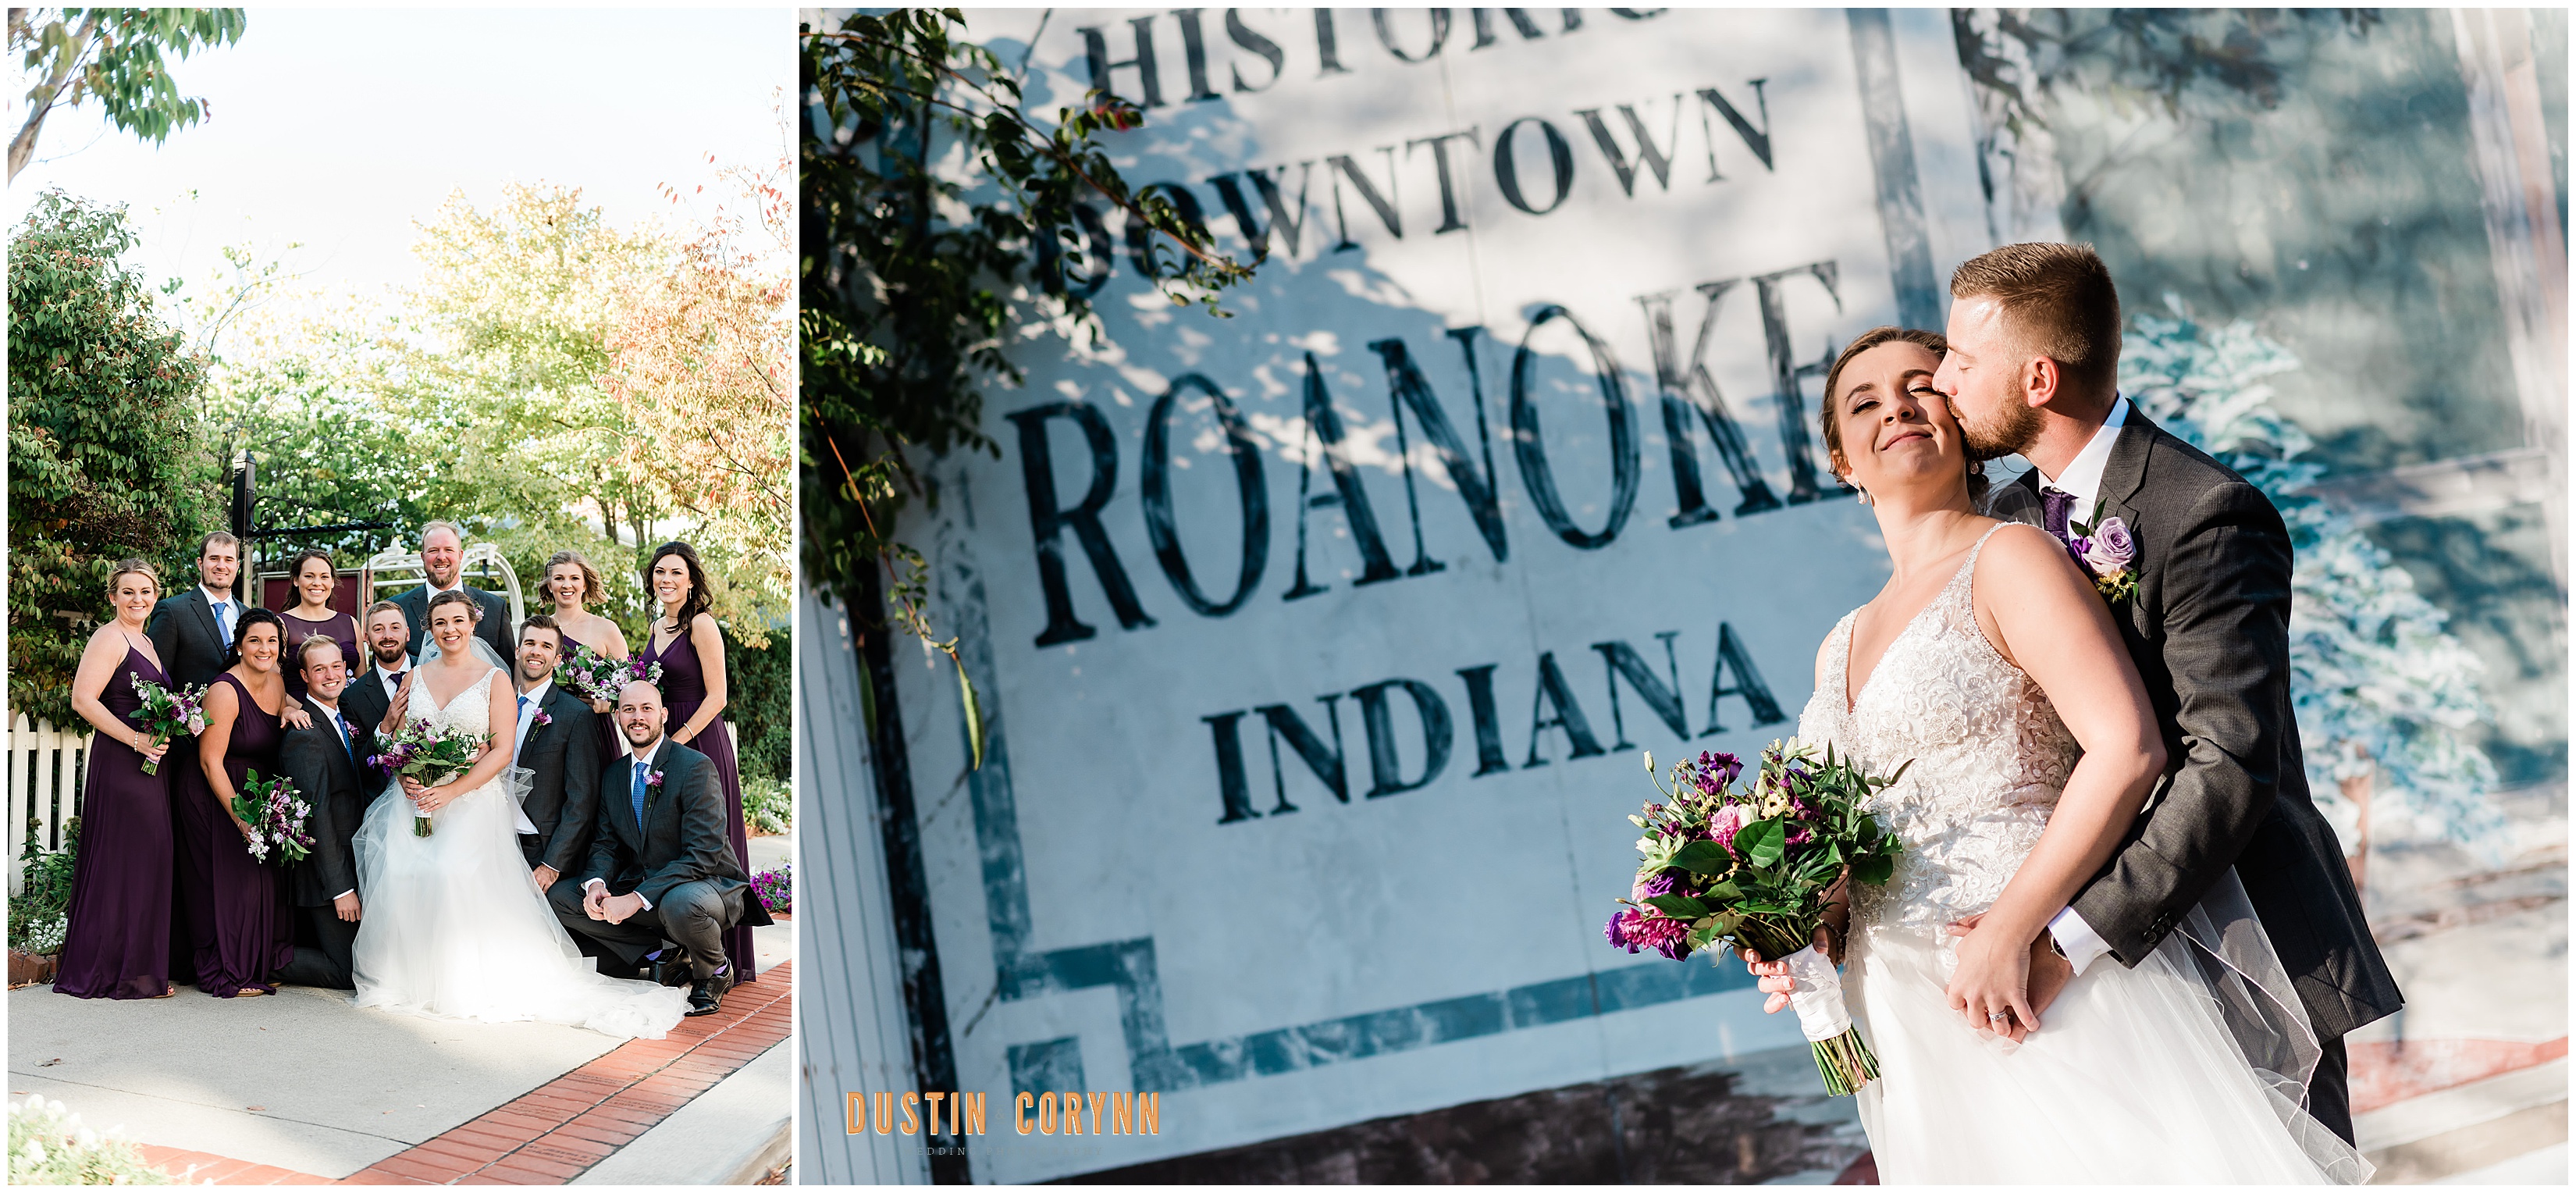 Portraits at Roanoke Indiana Wedding